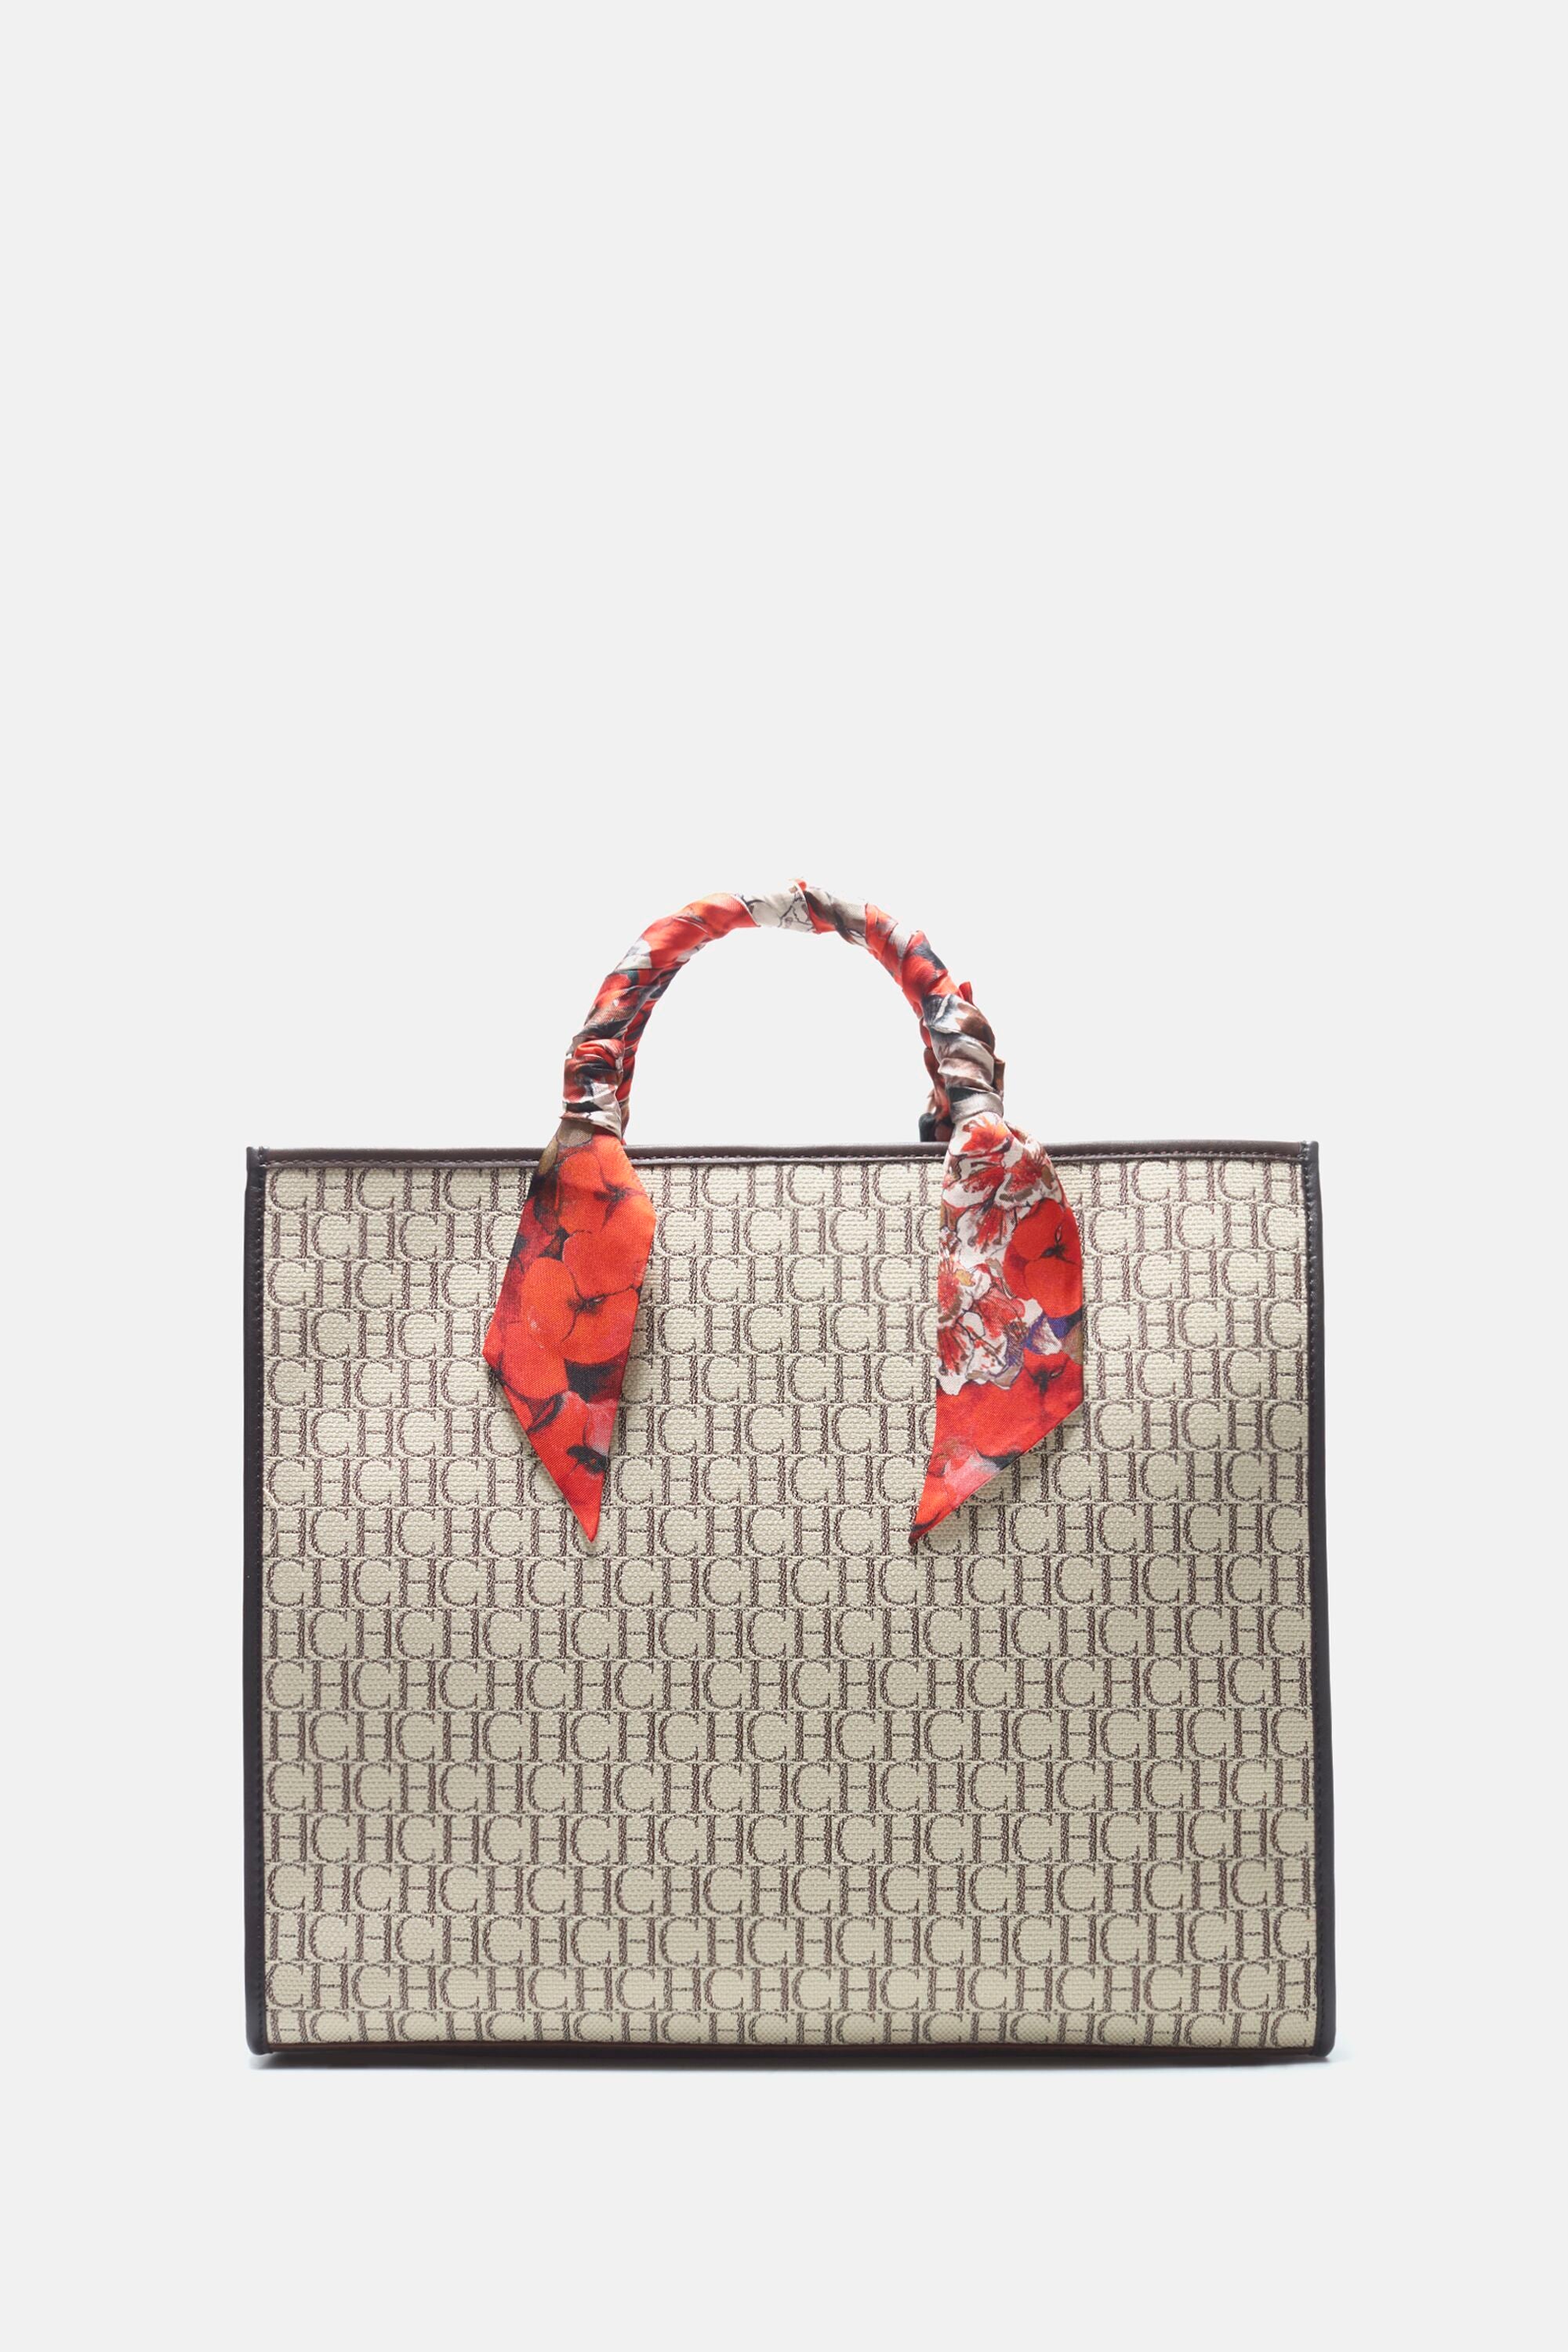 Carolina Herrera Exterior Bags & Handbags for Women for sale | eBay